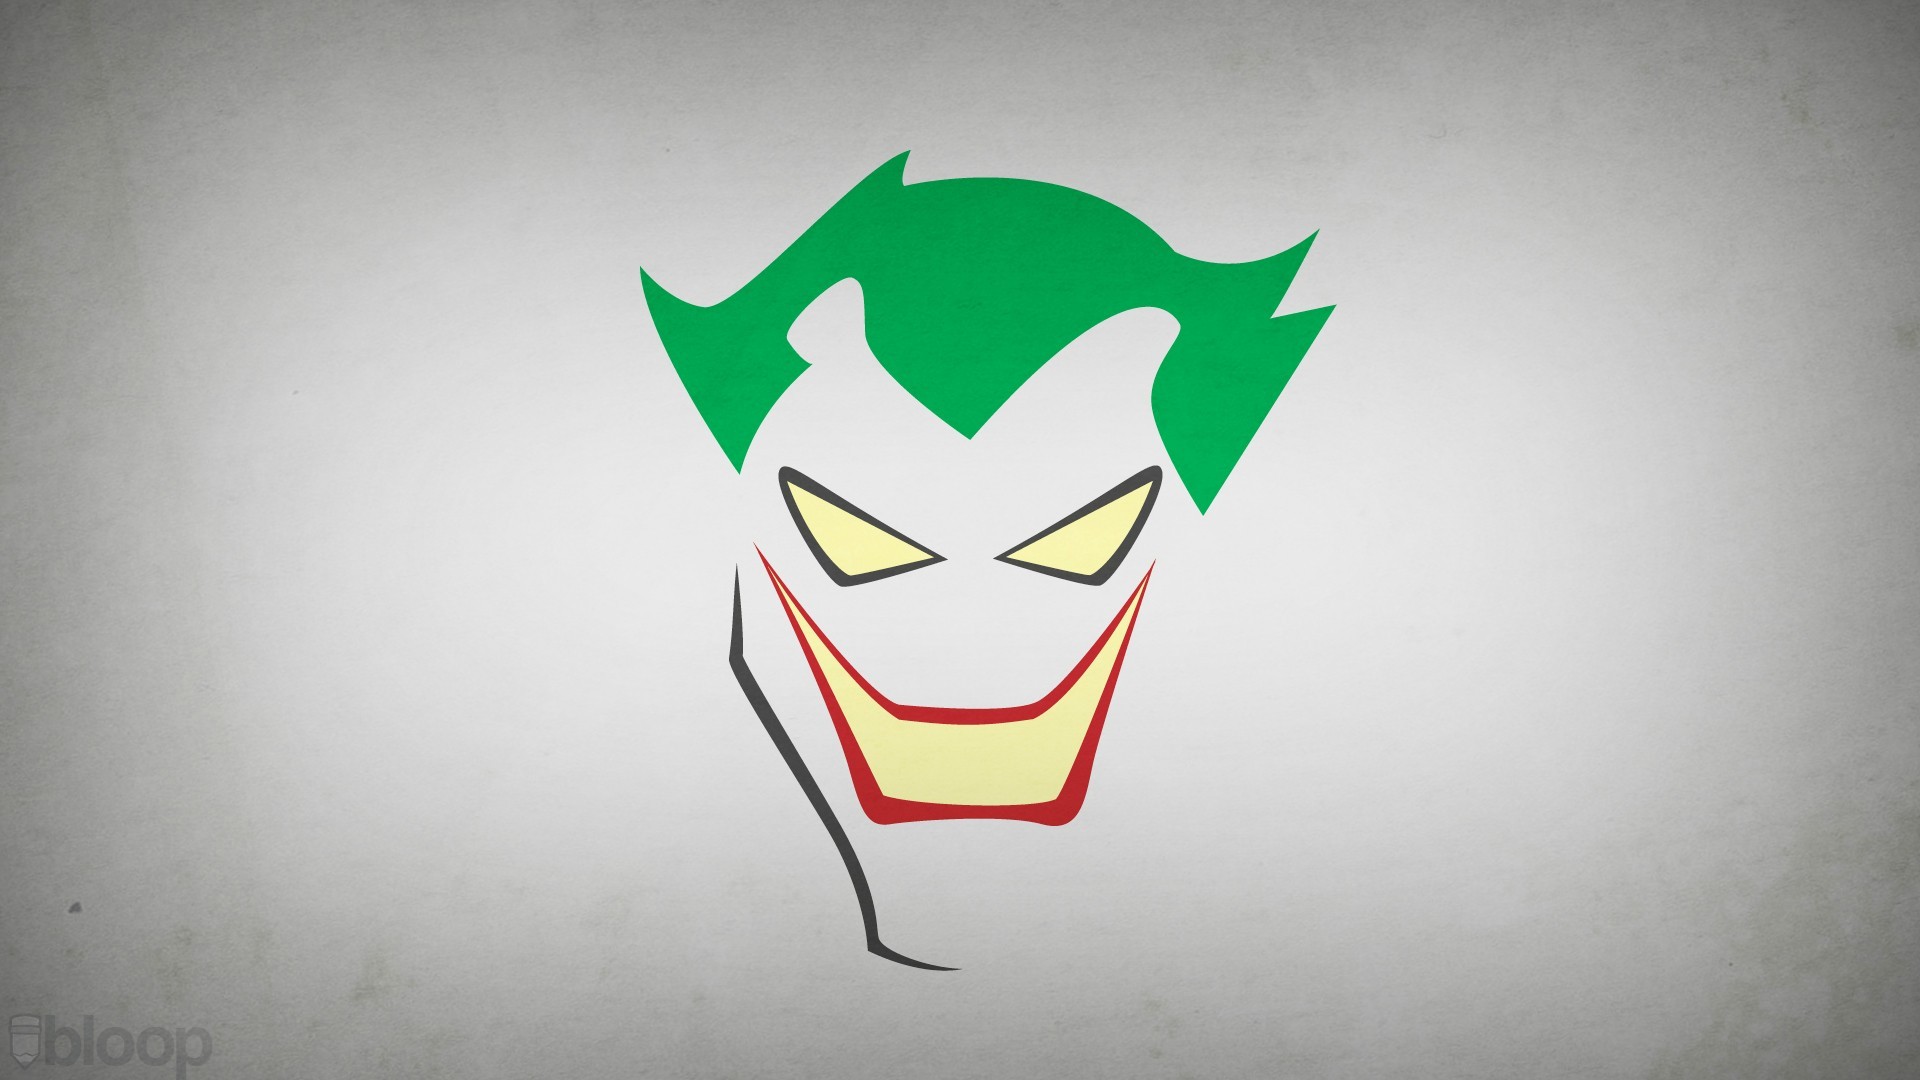 General 1920x1080 Batman Blo0p villains DC Comics Joker minimalism artwork face simple background